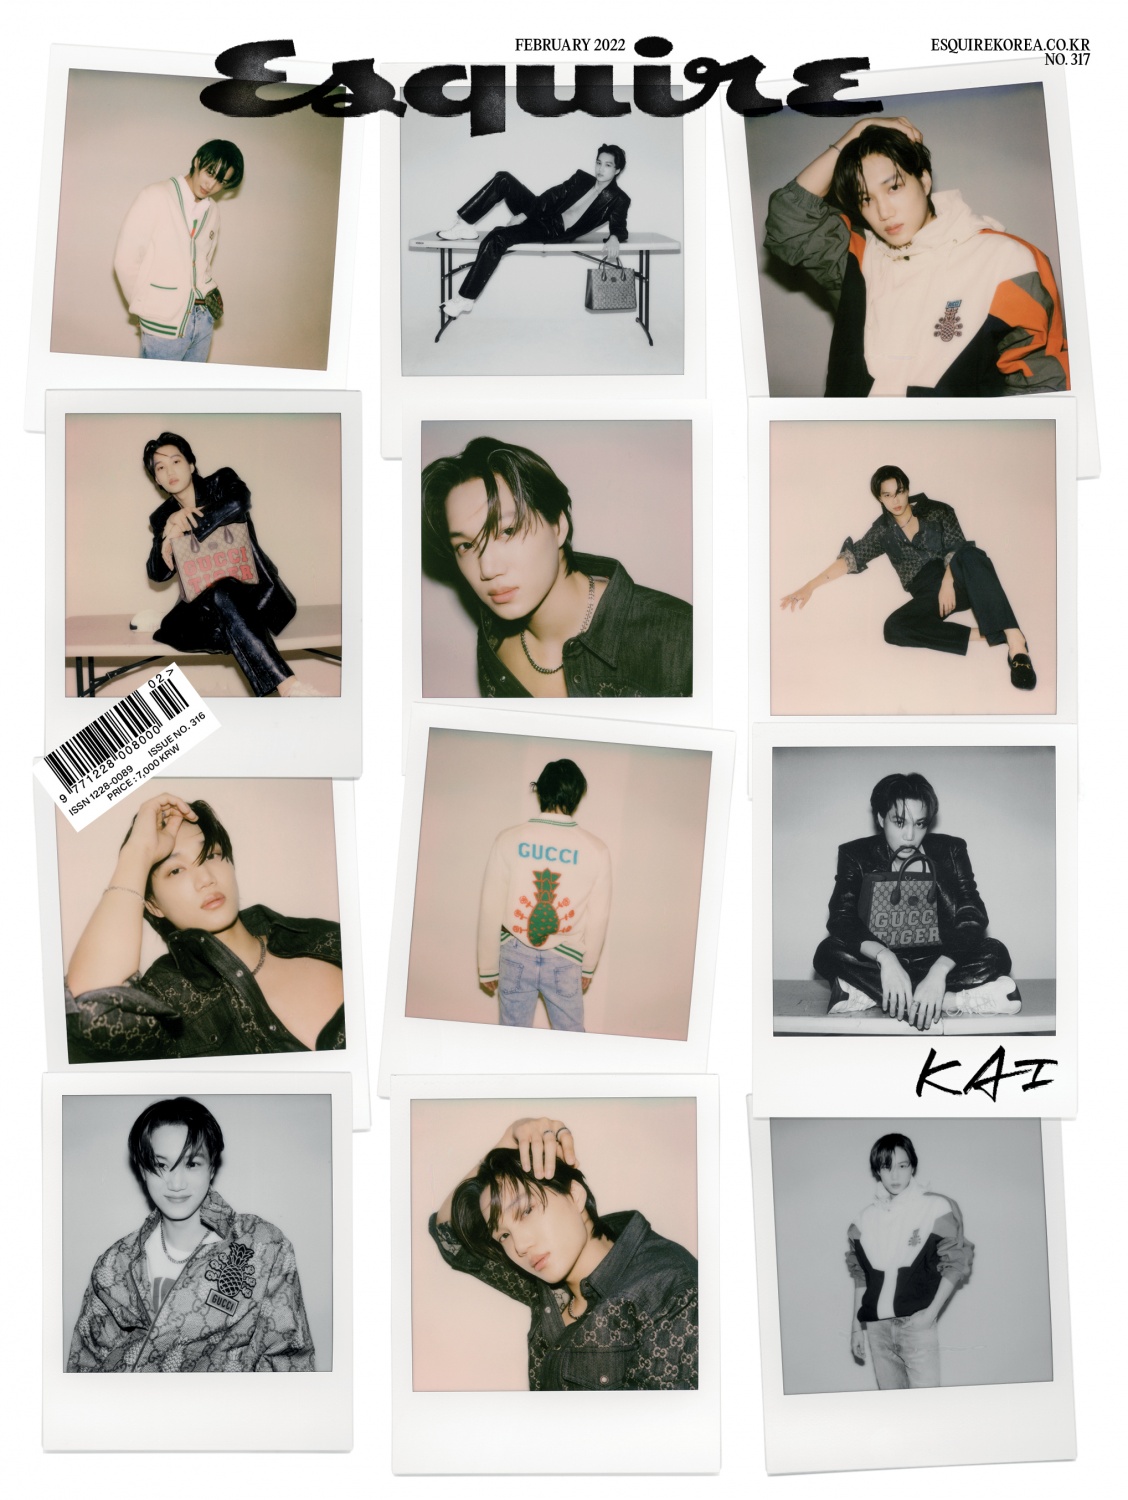 EXO Kai, Rolling Stone's 25 Most Stylish Musicians